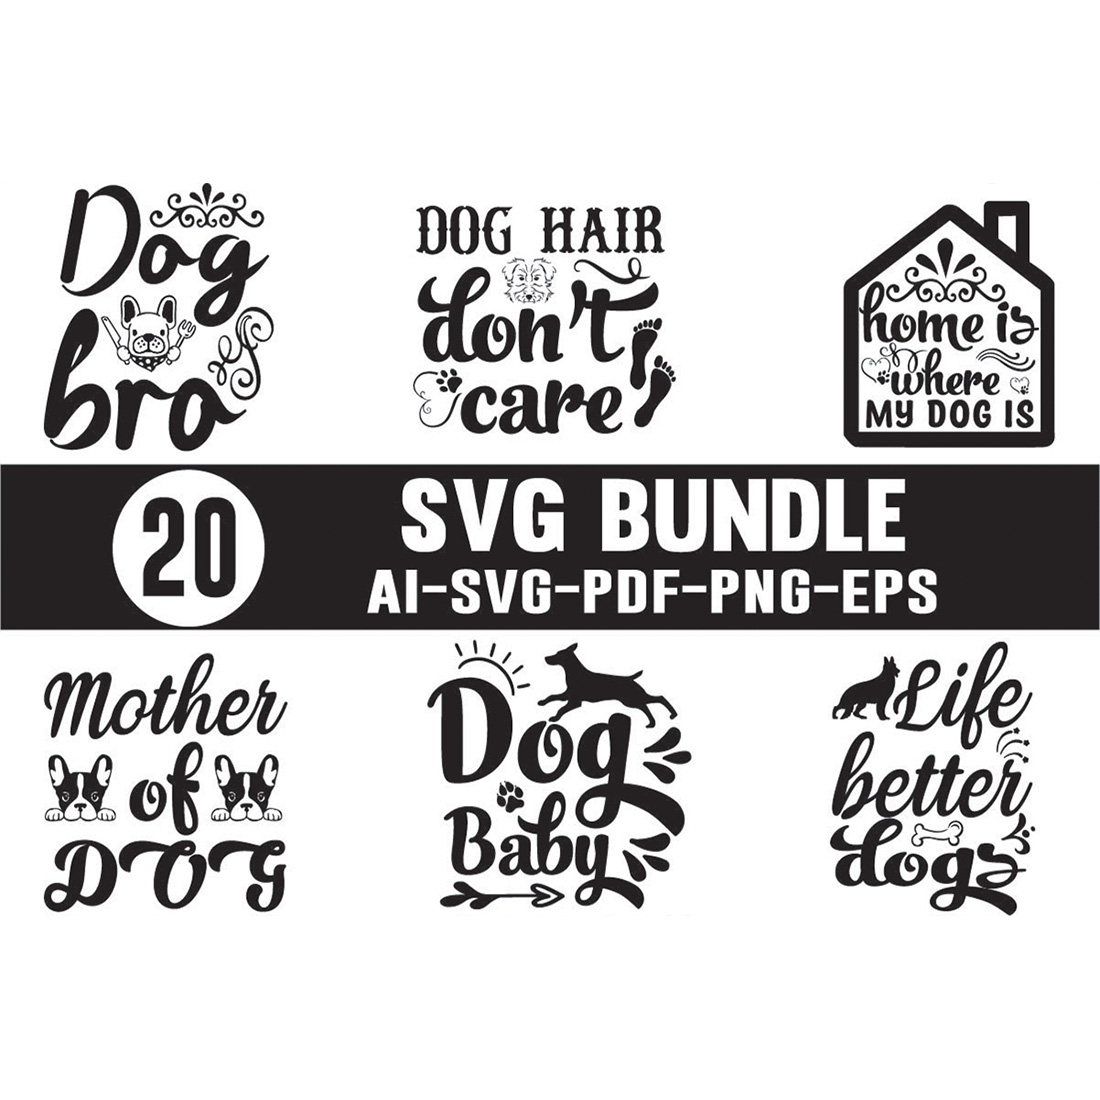 The svg bundle includes a dog house.